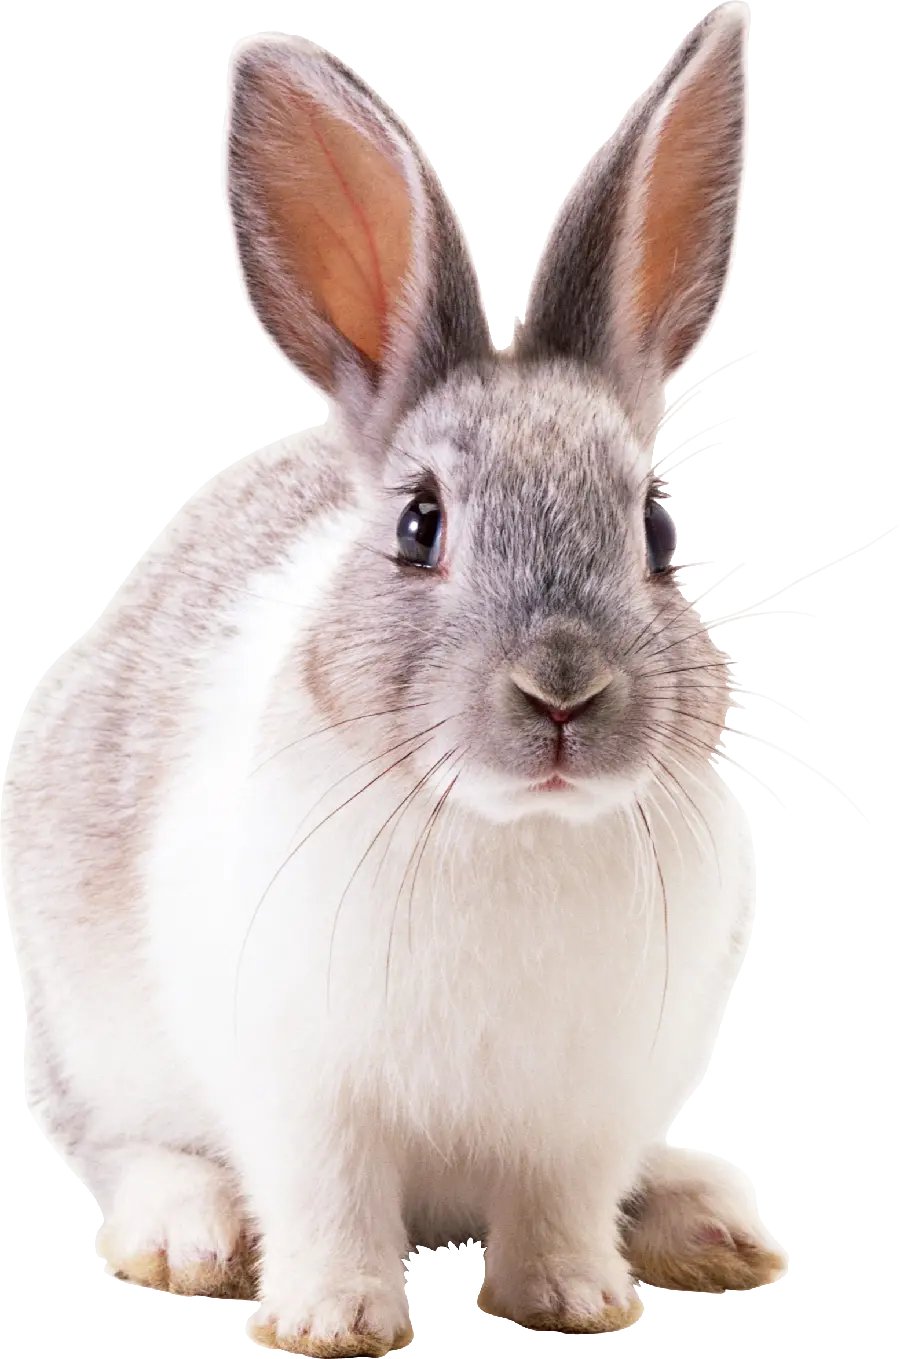 تصویر زمینه PNG خرگوش واقعی از نژاد خرگوش گوتلند سوئدی